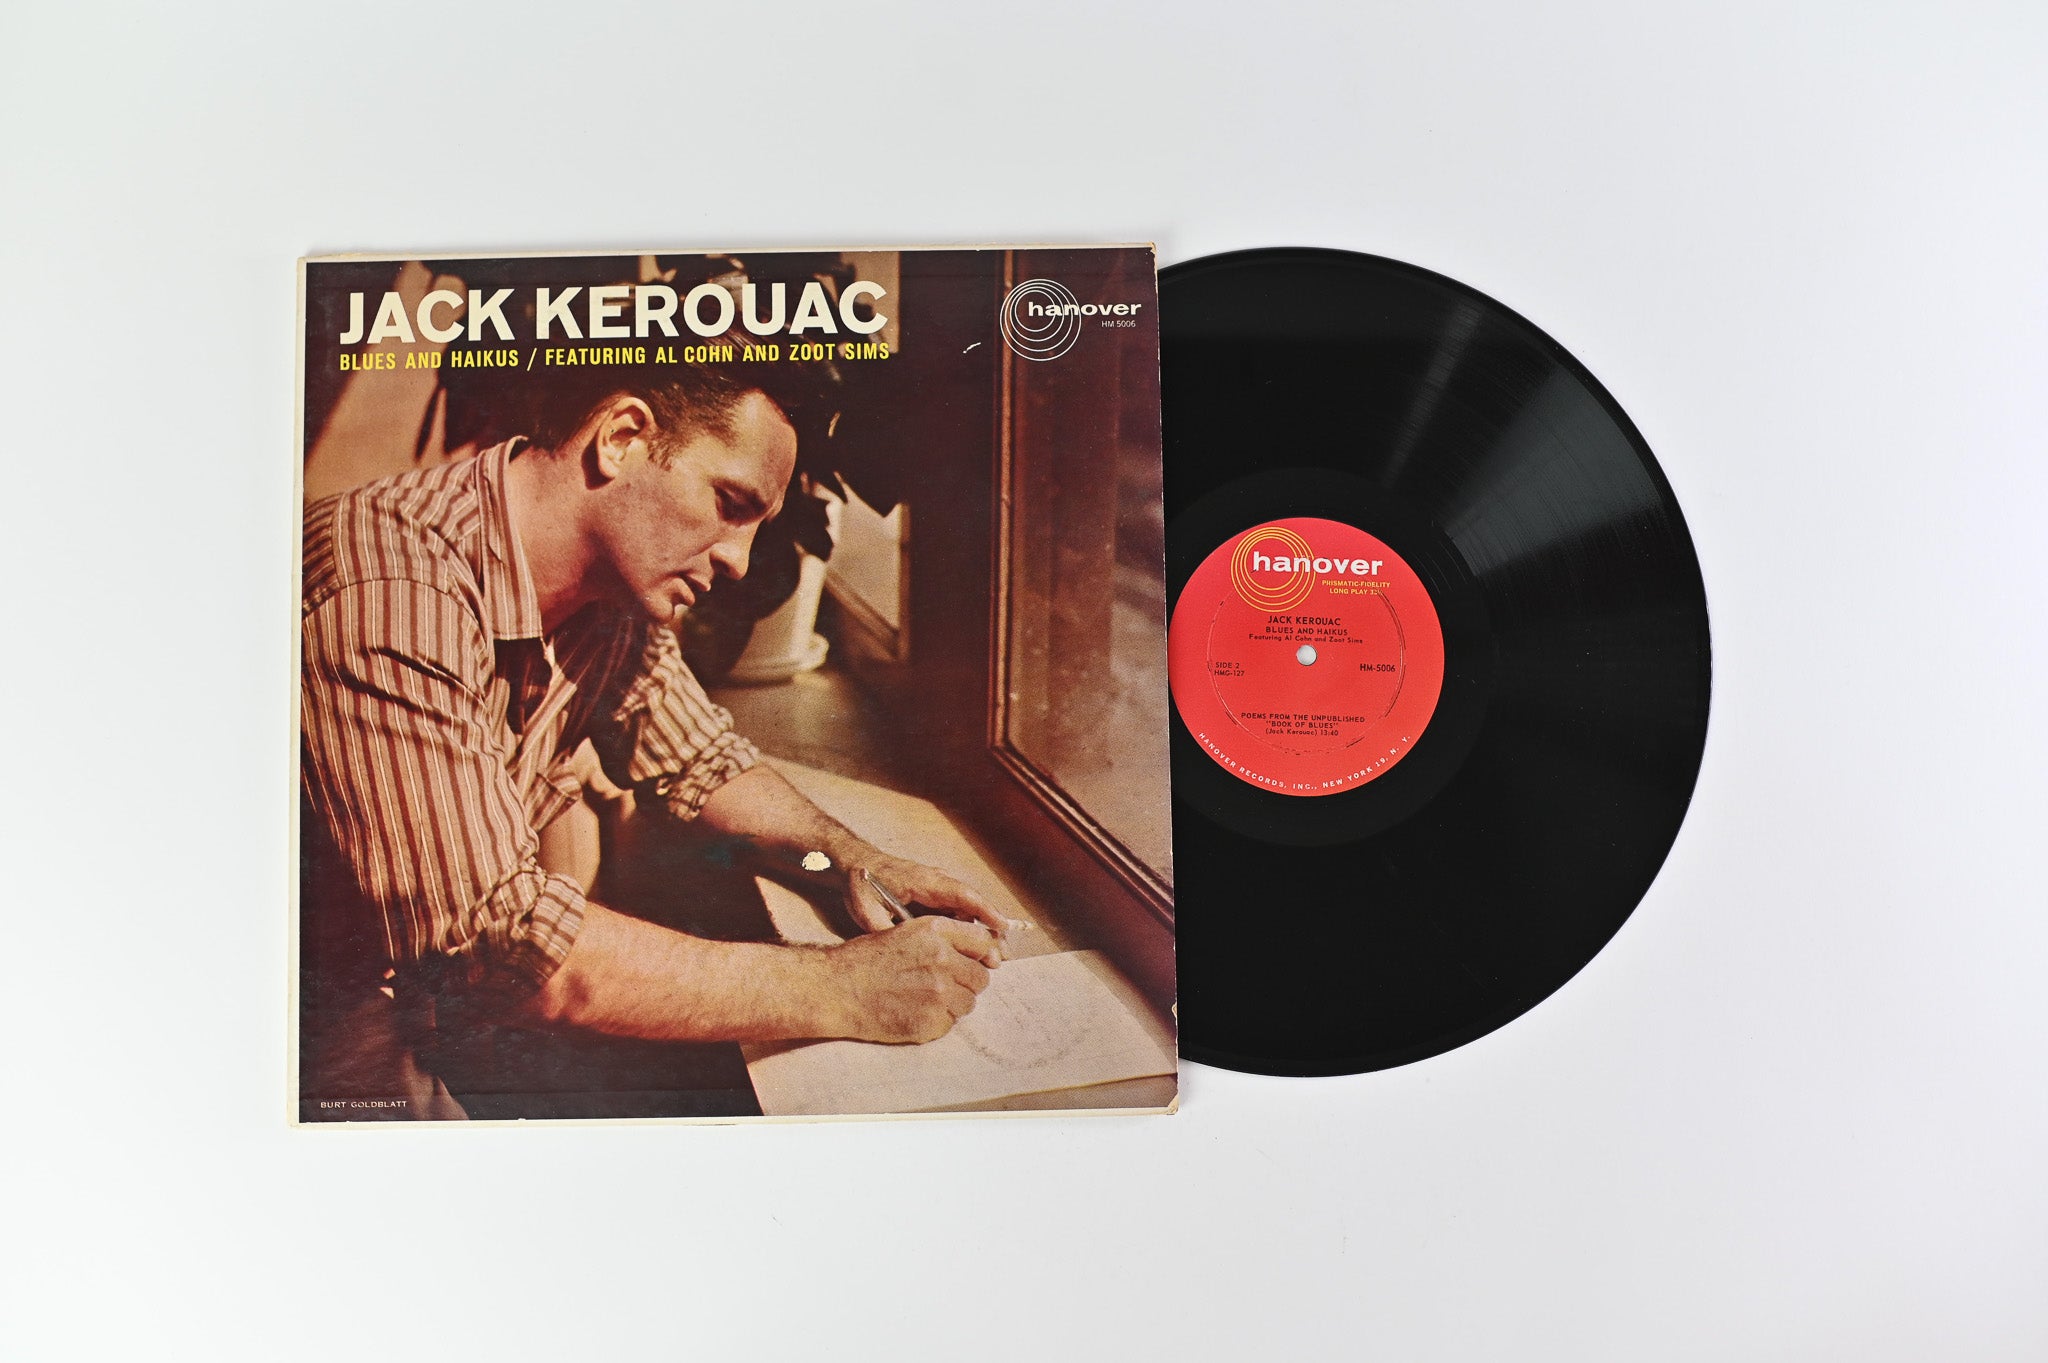 Jack Kerouac - Blues And Haikus on Hanover